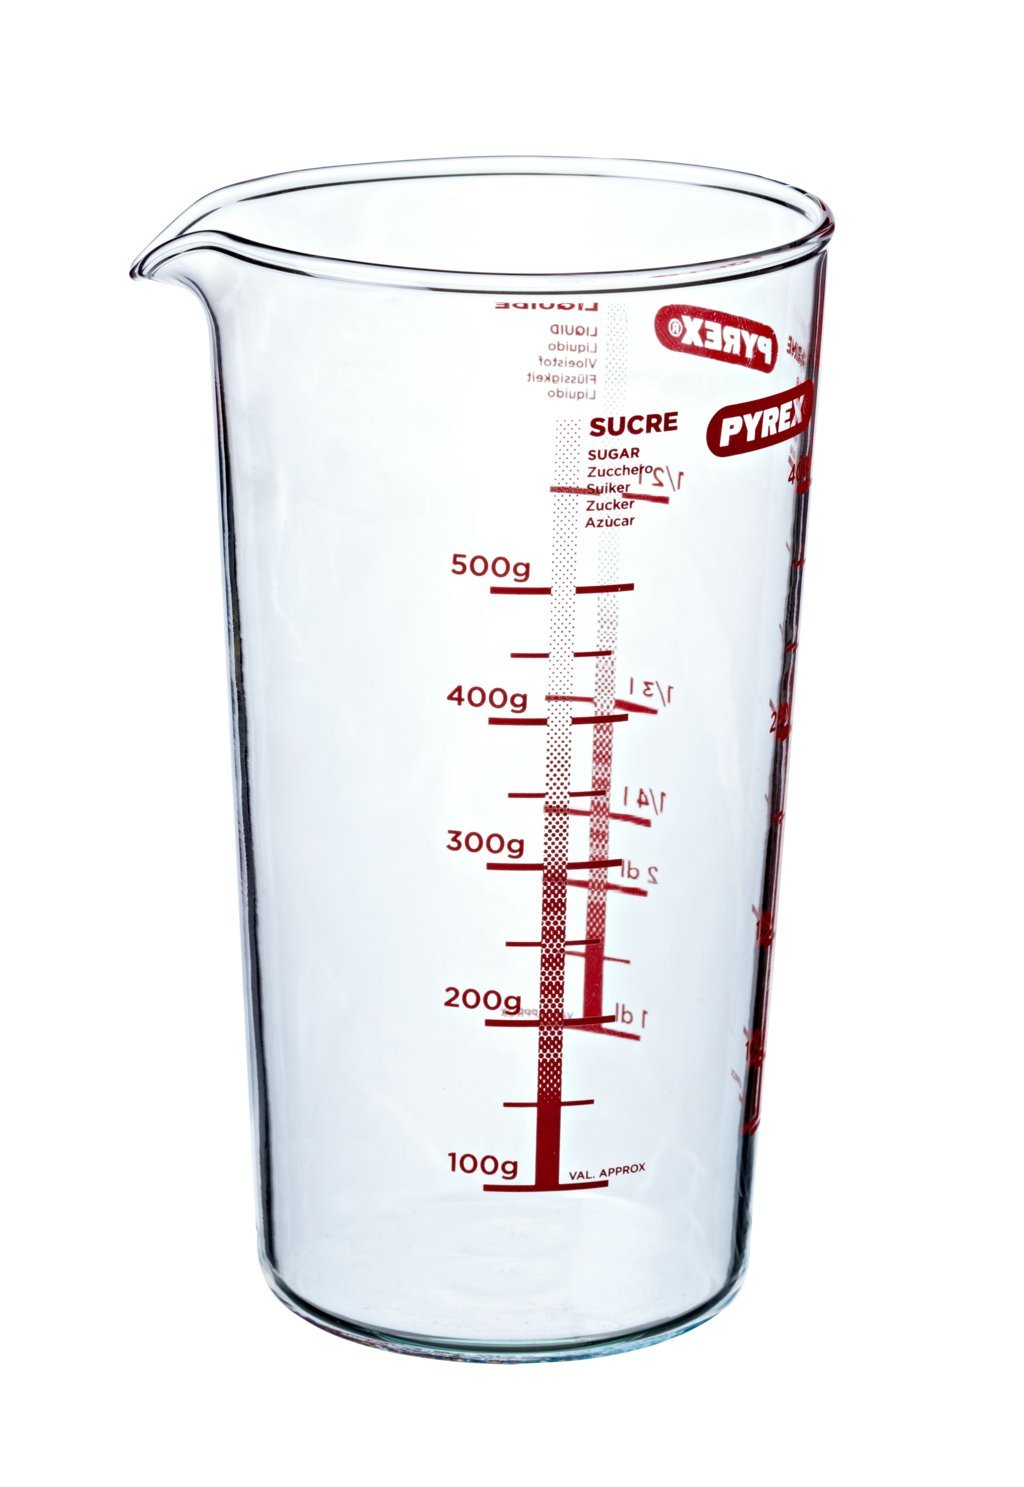 Buy Kitchen Classics Glass Measure Jug - 1 Cup/250ml – Biome US Online